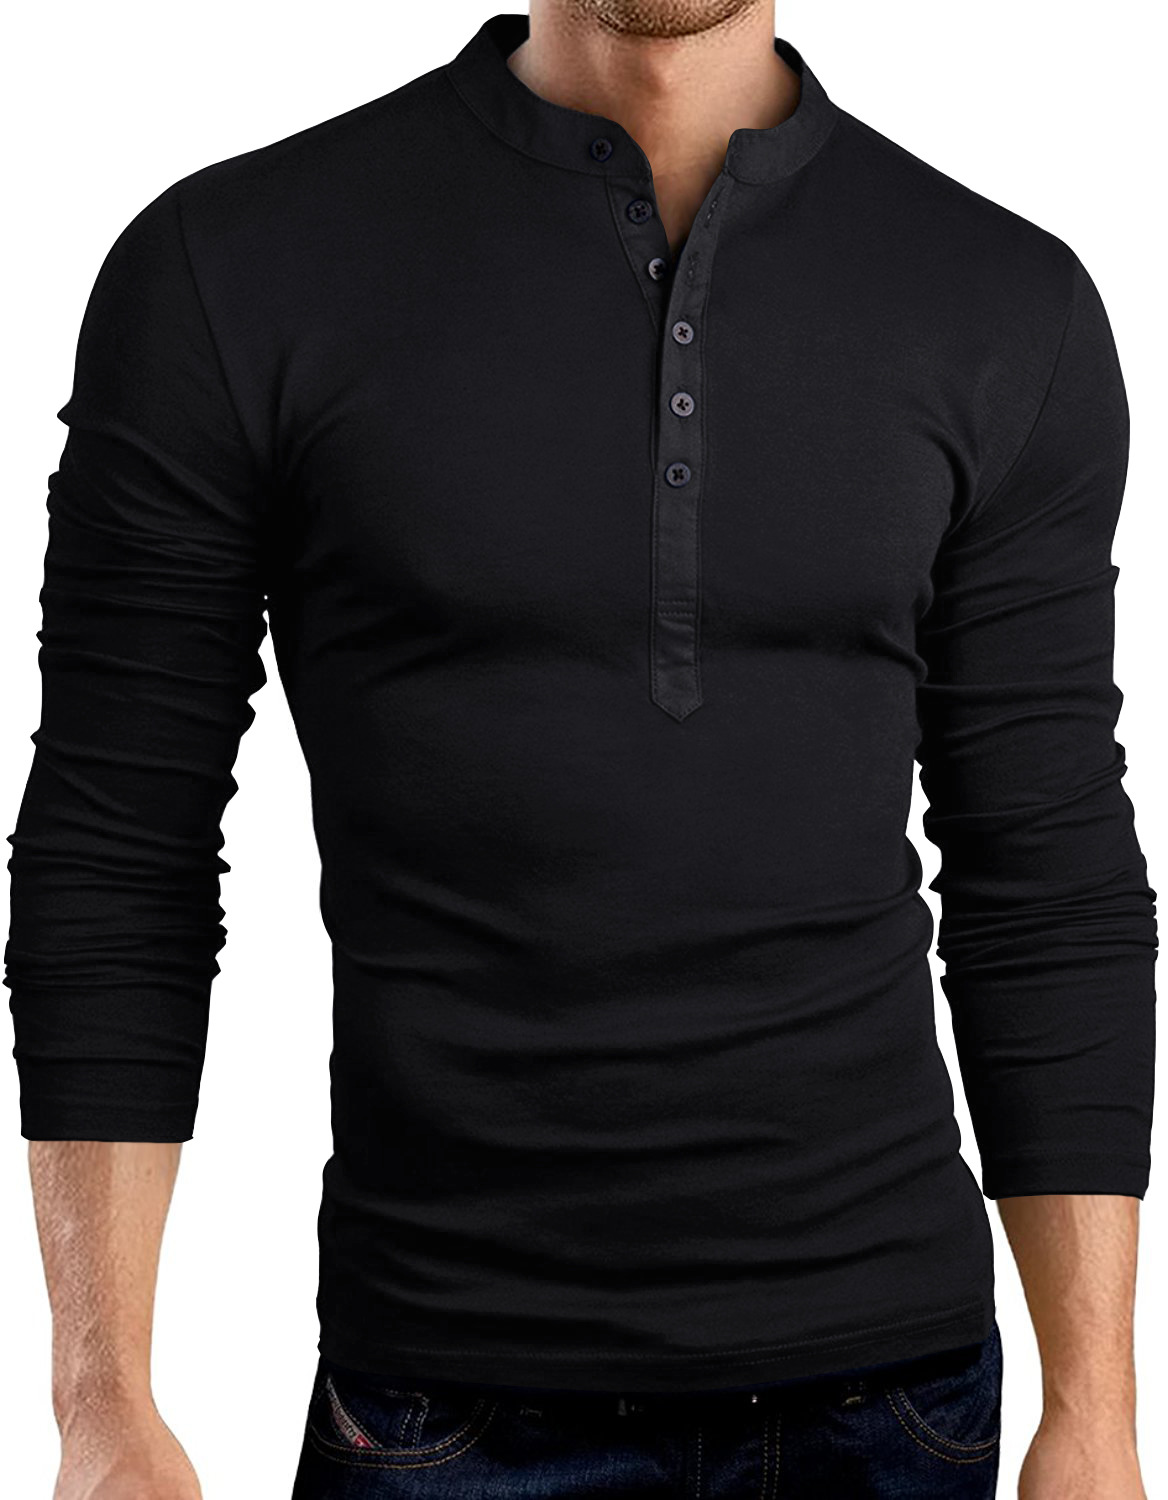 Men Long Sleeve T Shirt Spring Autumn V Neck Button Slim Fit Casual Tops black